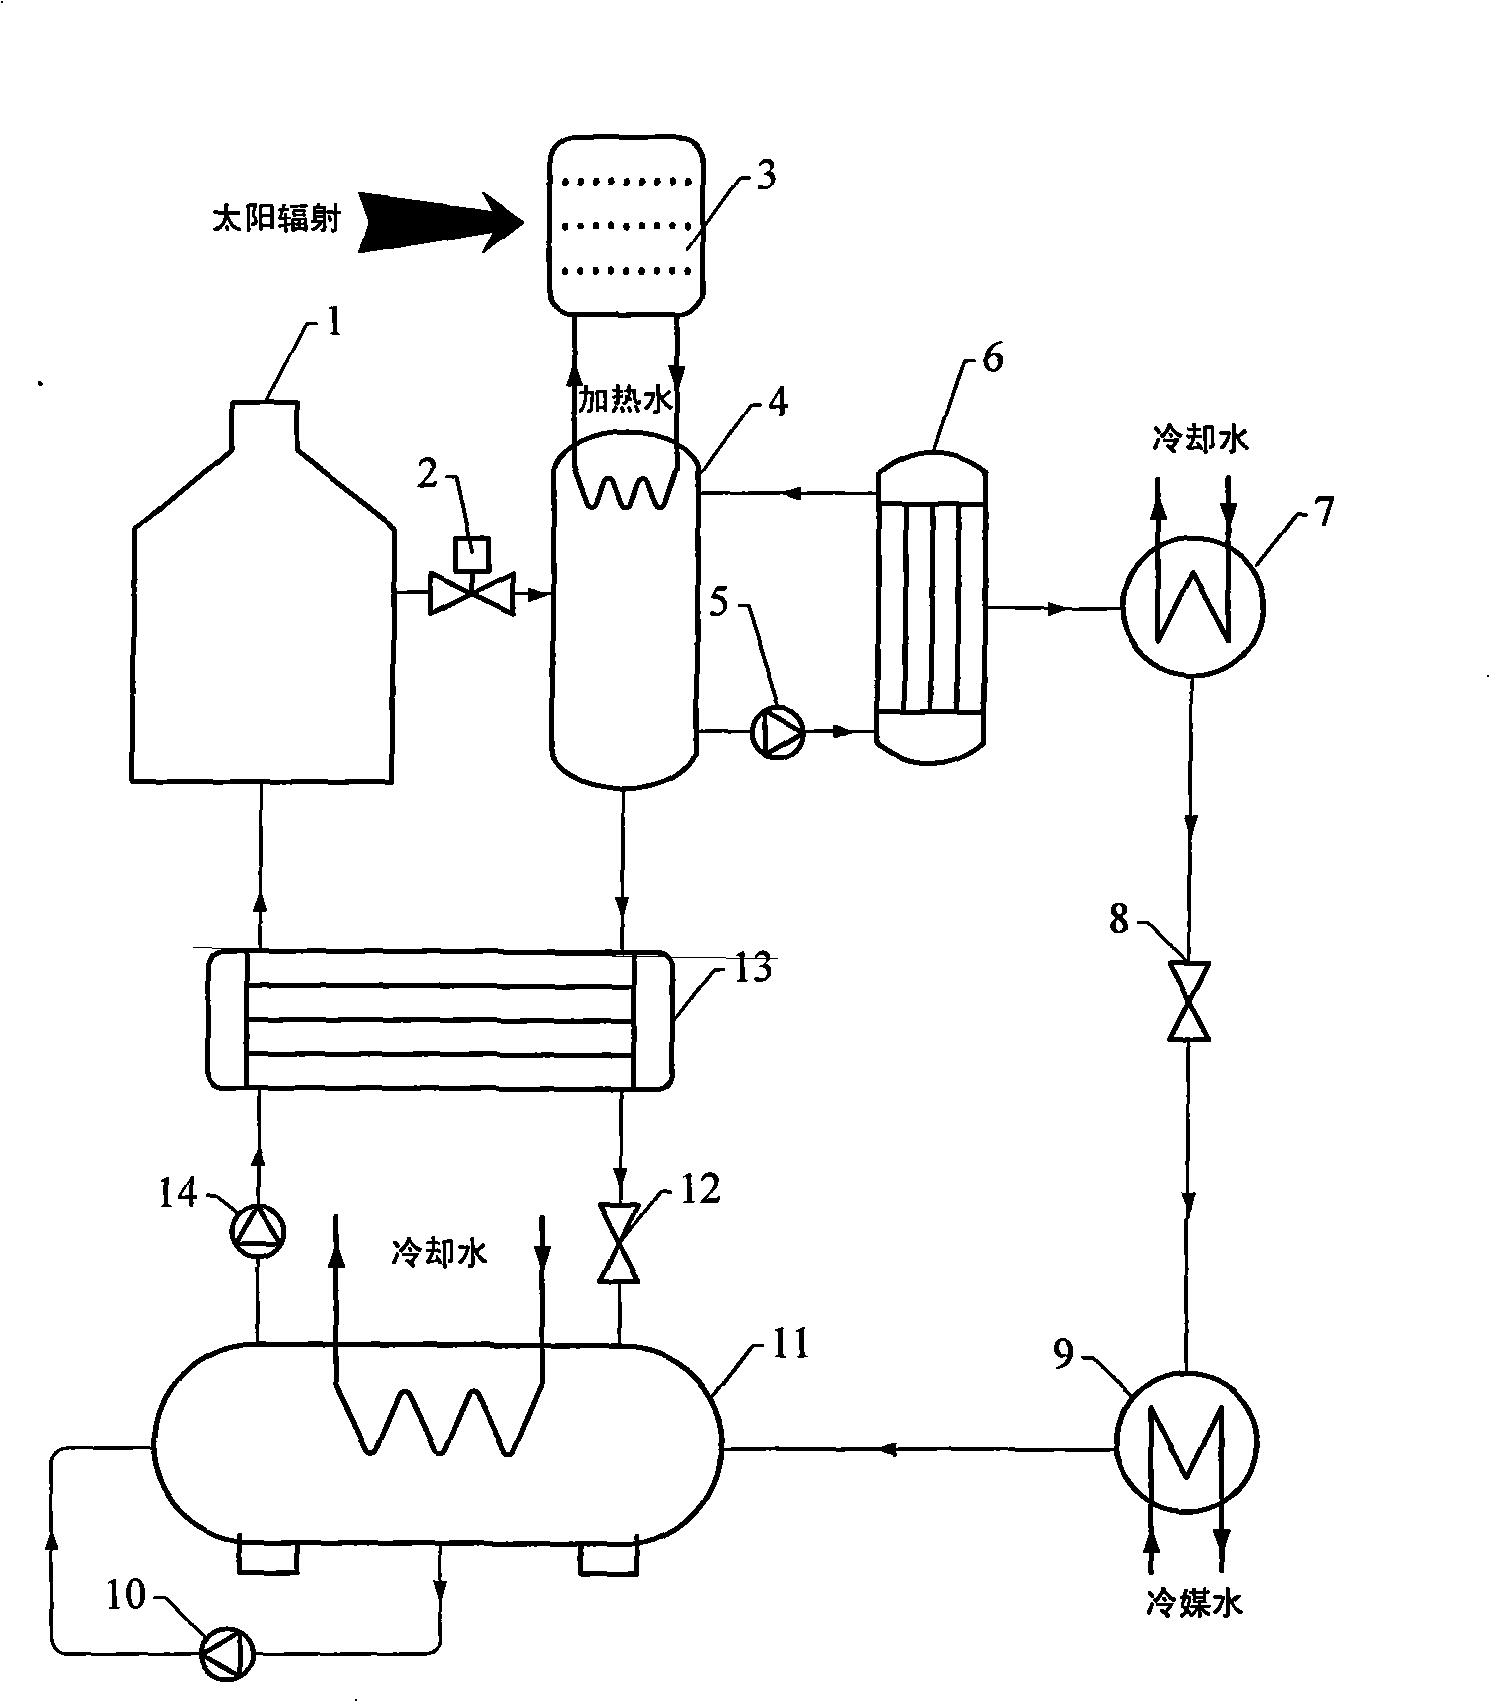 Absorption type refrigerator employing film distillation technology